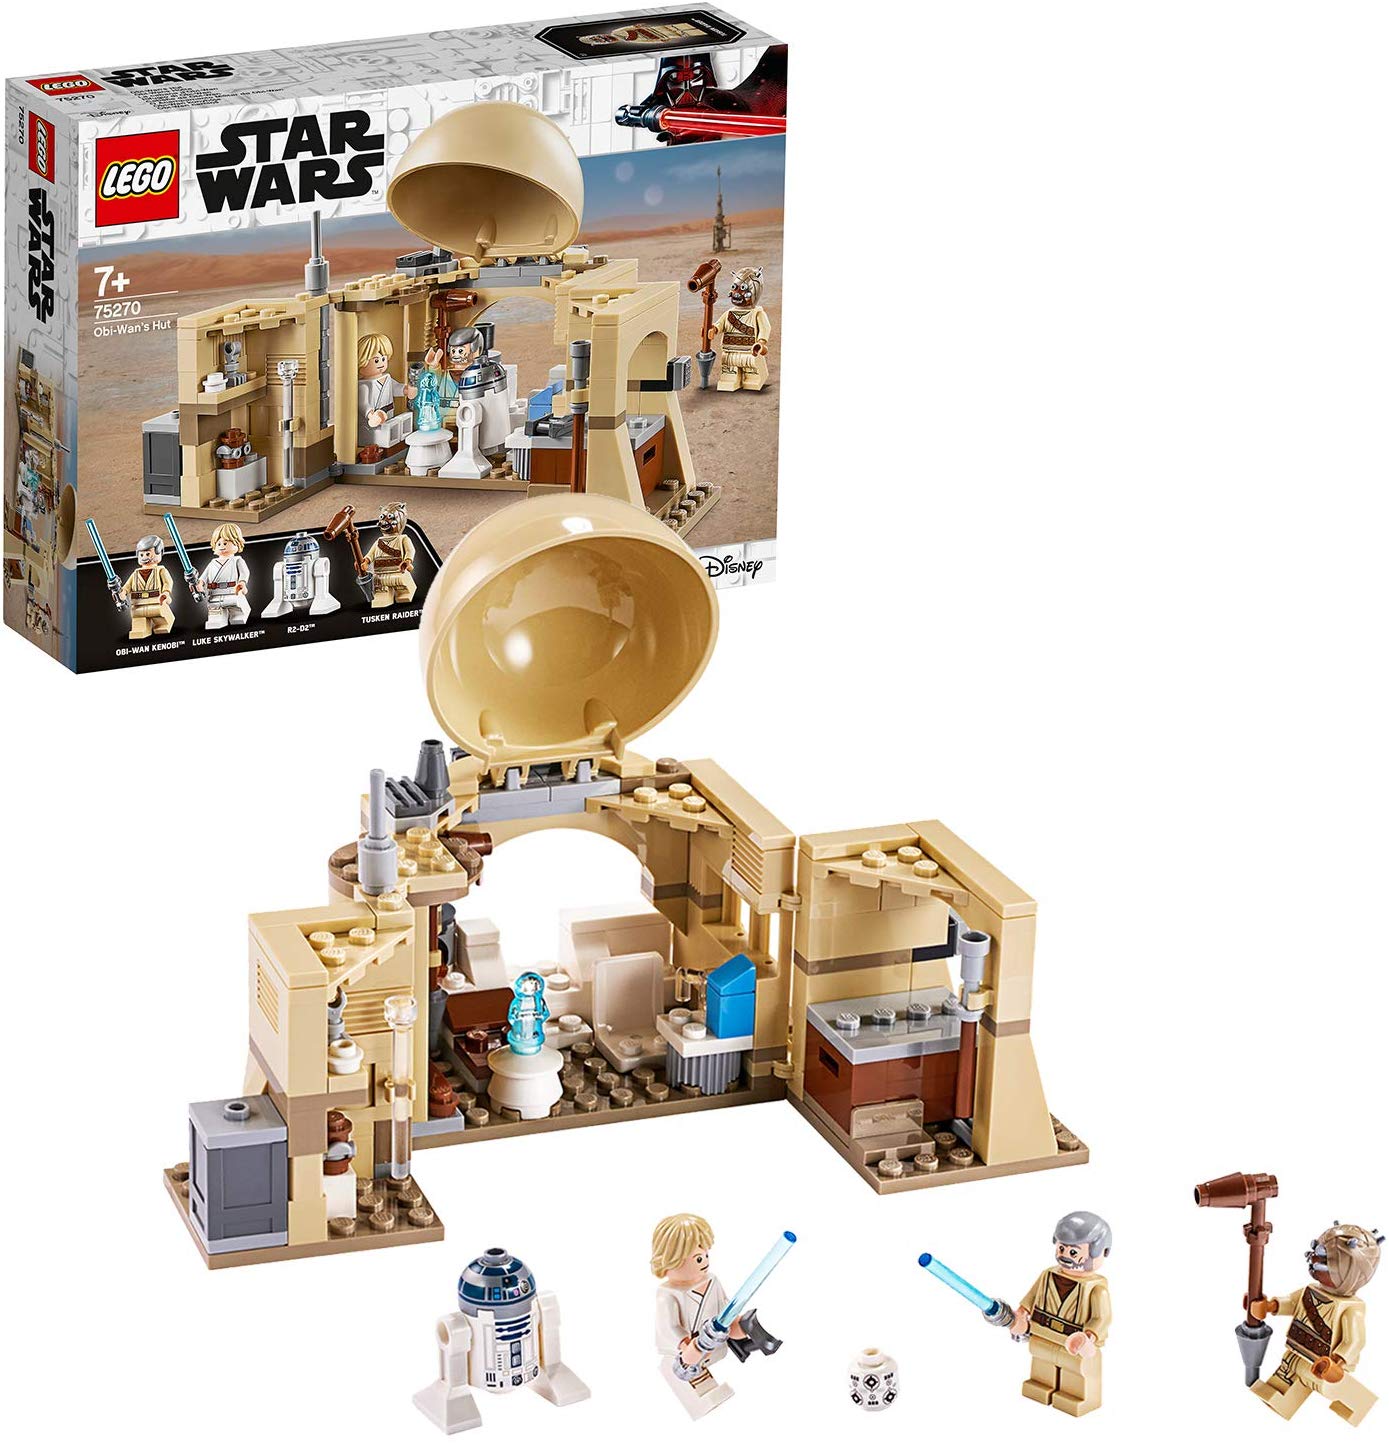 Lego 75270 Obi-Wans Cottage, Star Wars, Construction Set